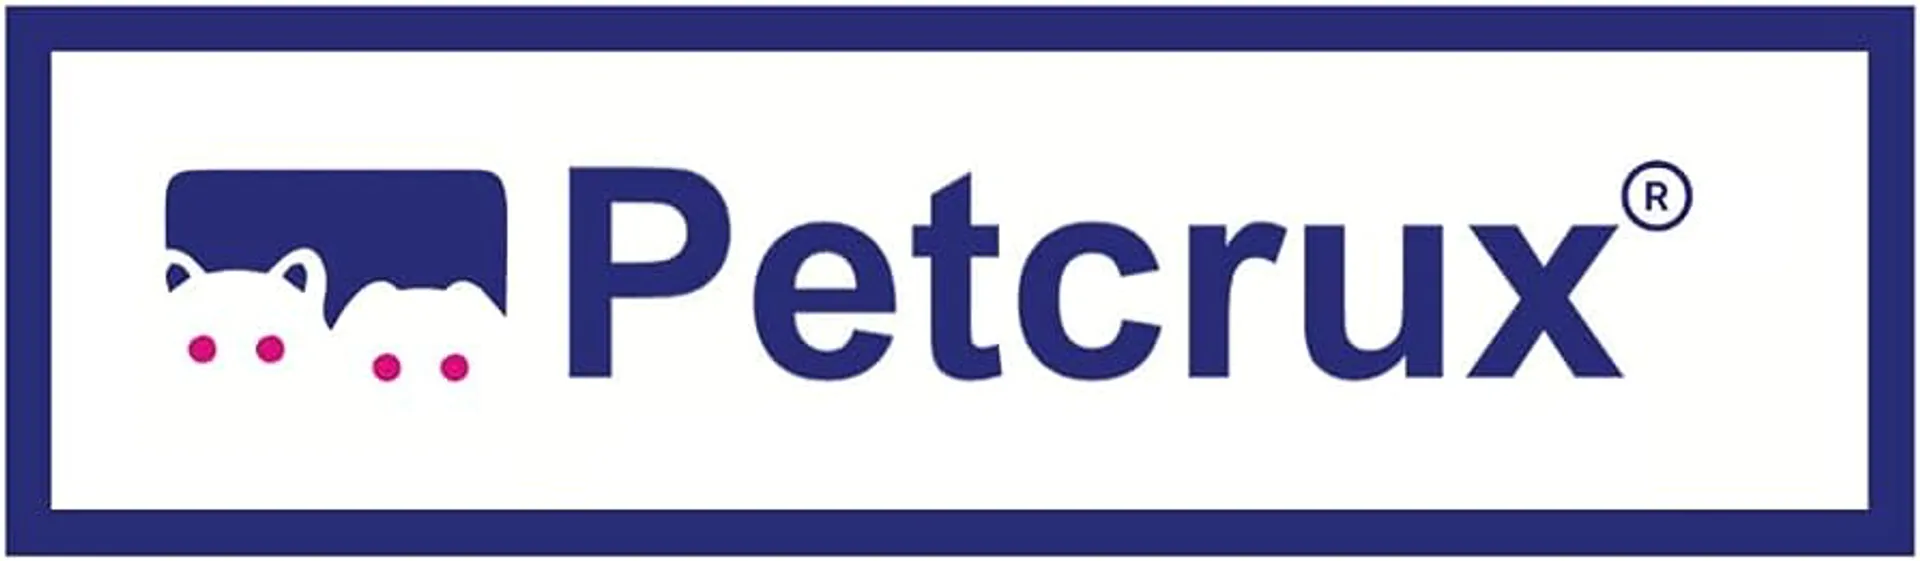 PETCRUX logo. Current catalogue